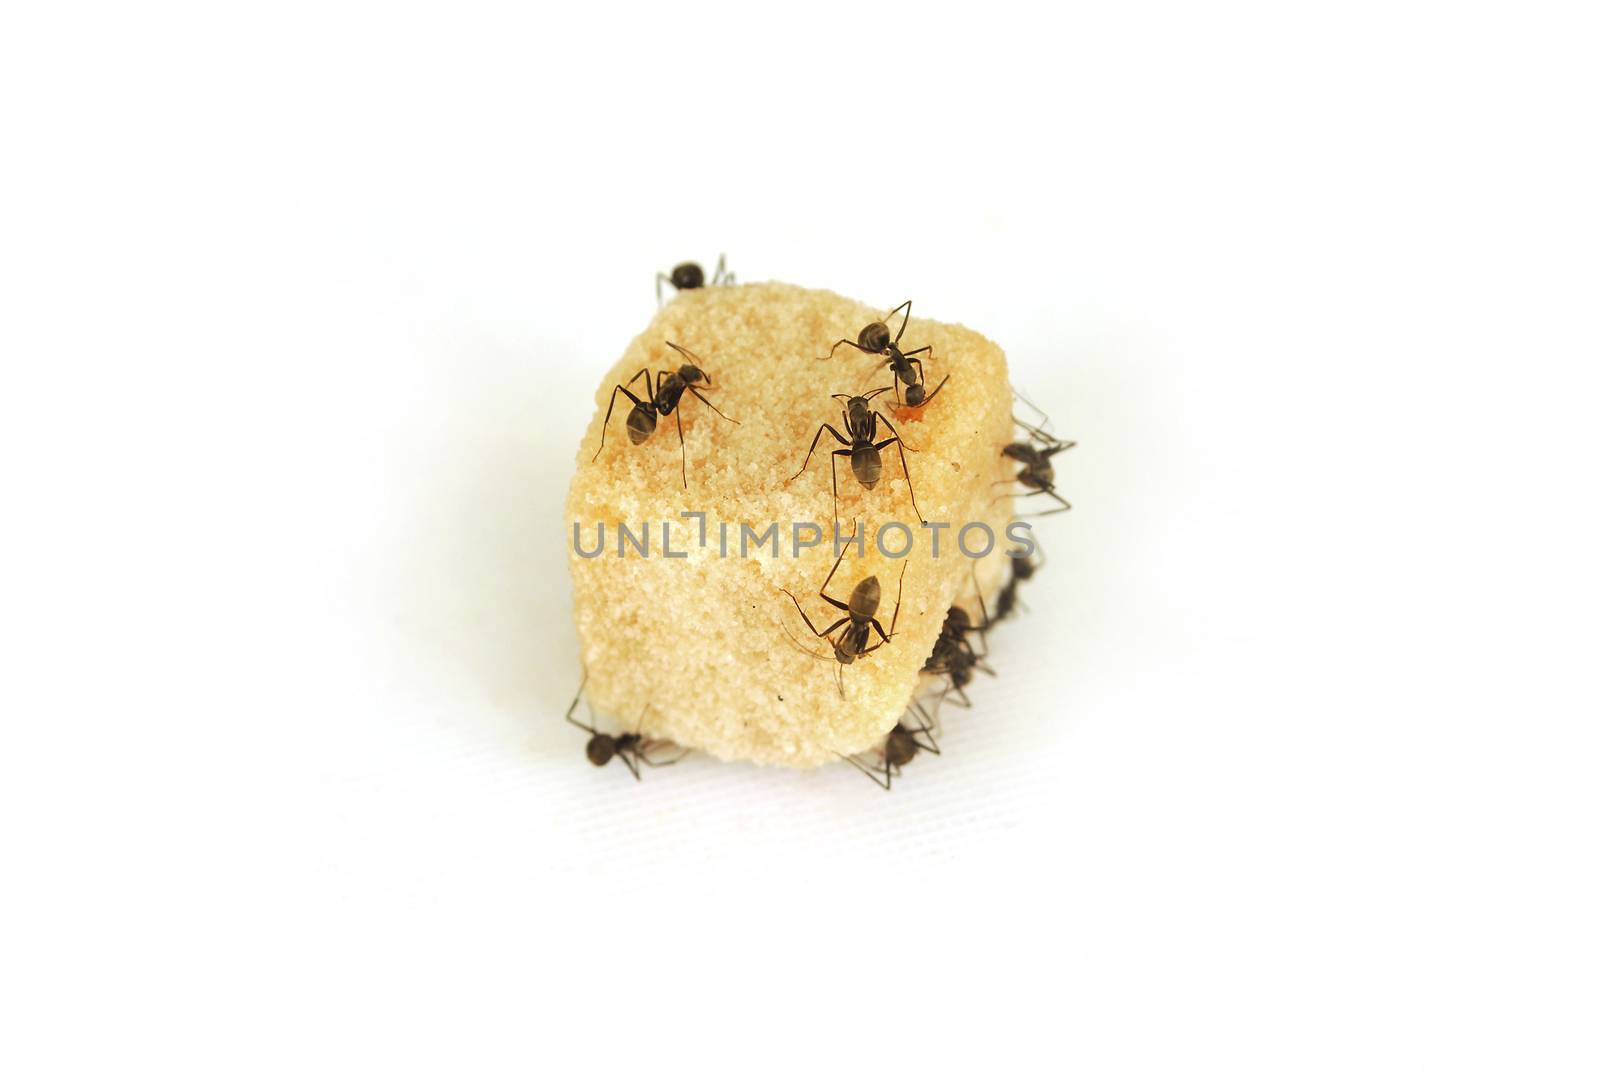 Ants eat sugar. by thitimontoyai